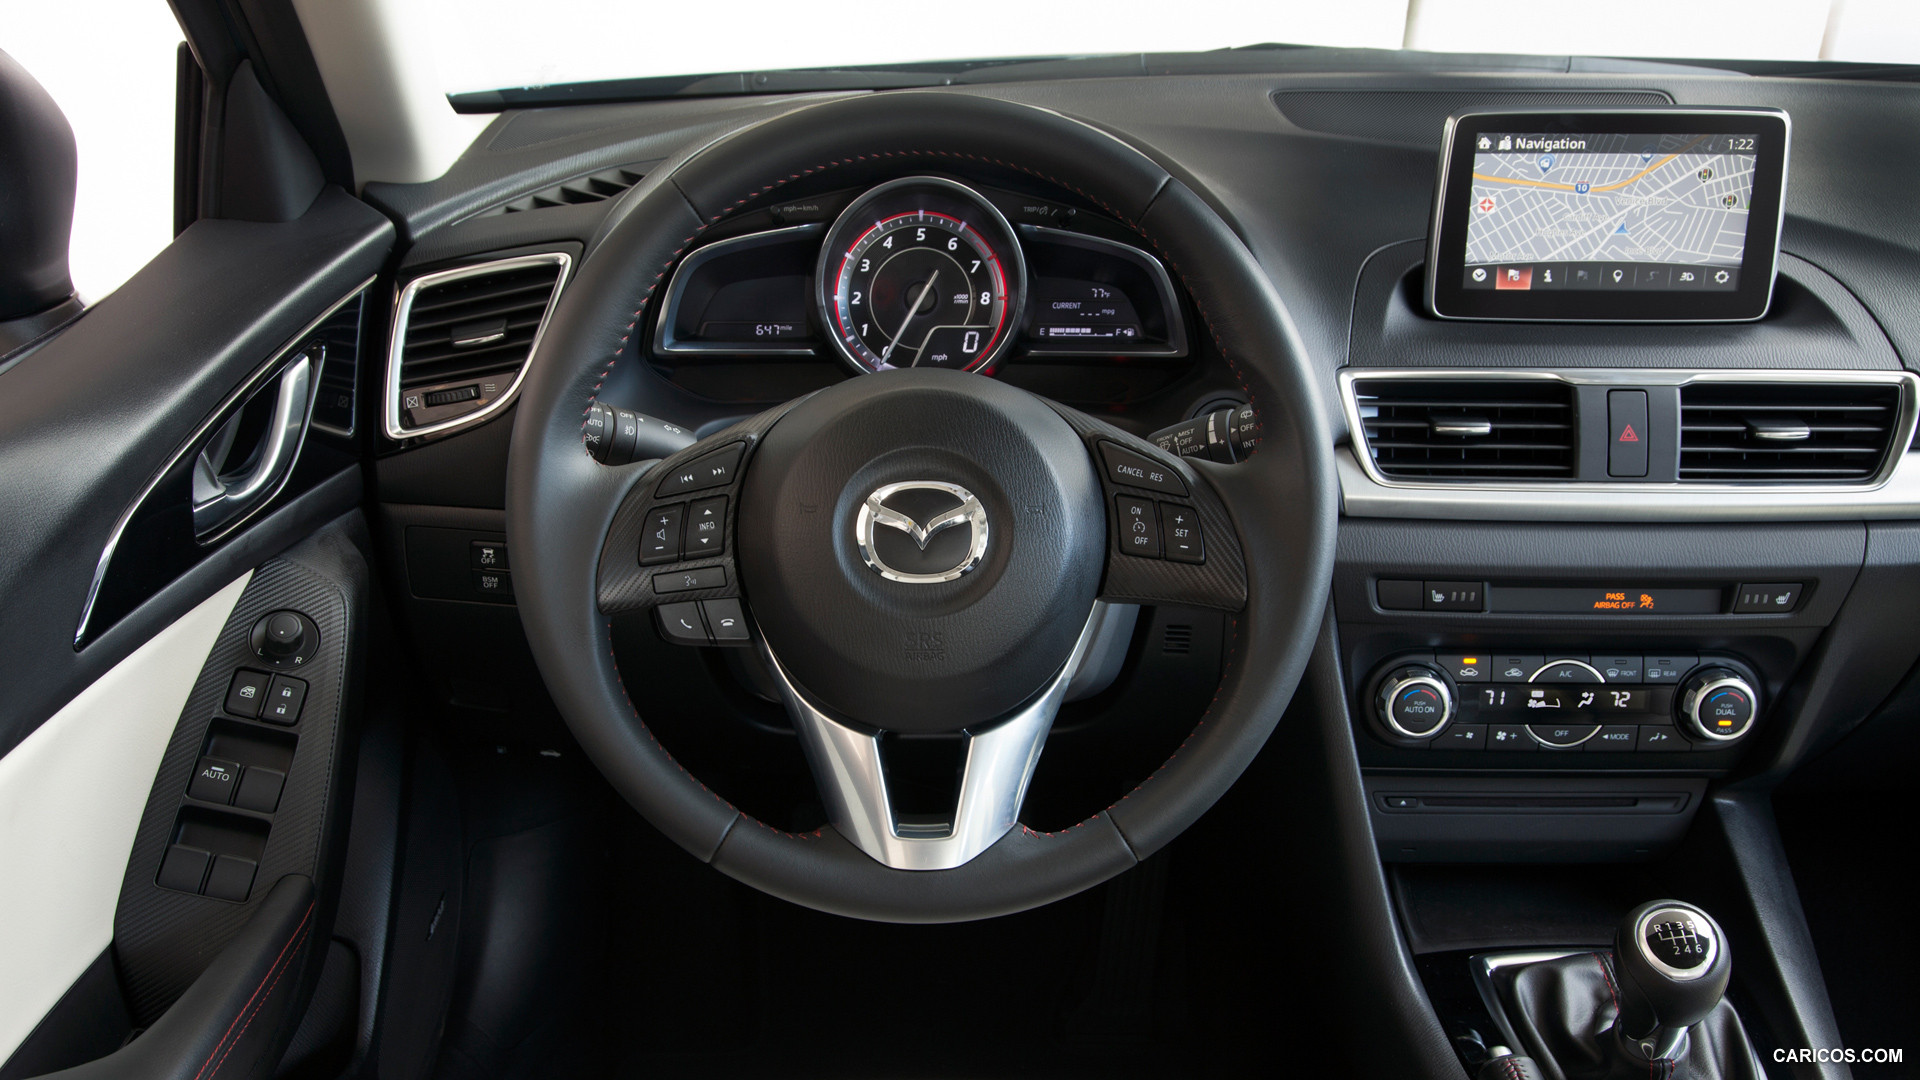 2015 Mazda 3 5D s Touring 6MT (Blue Reflex)  - Interior, #26 of 27